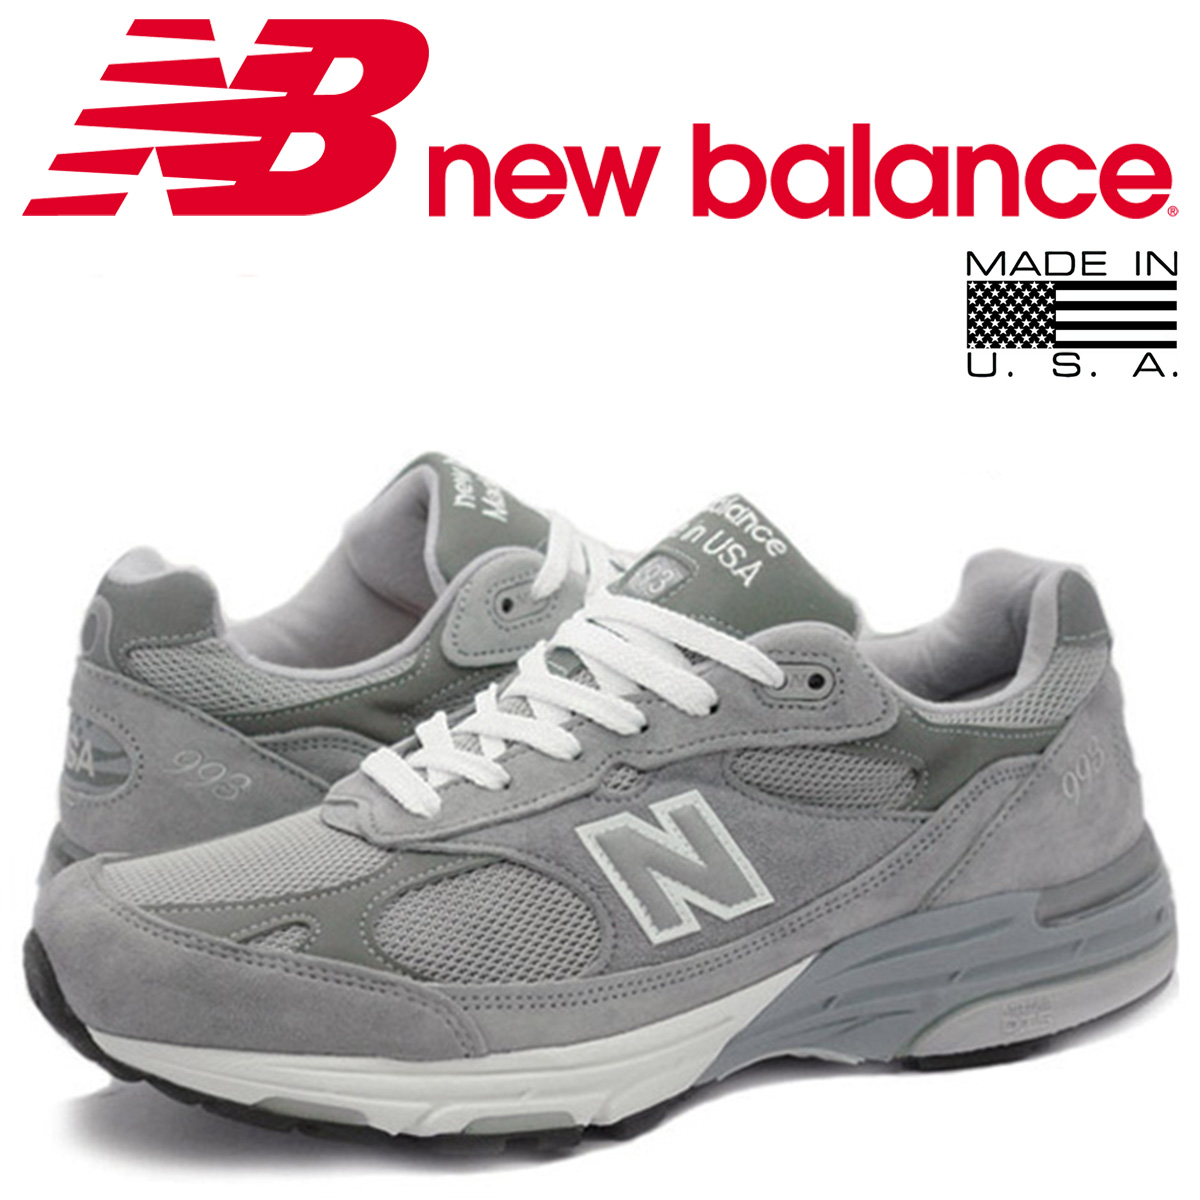 Allsports New Balance New Balance 993 Sneakers Men D Wise Gray